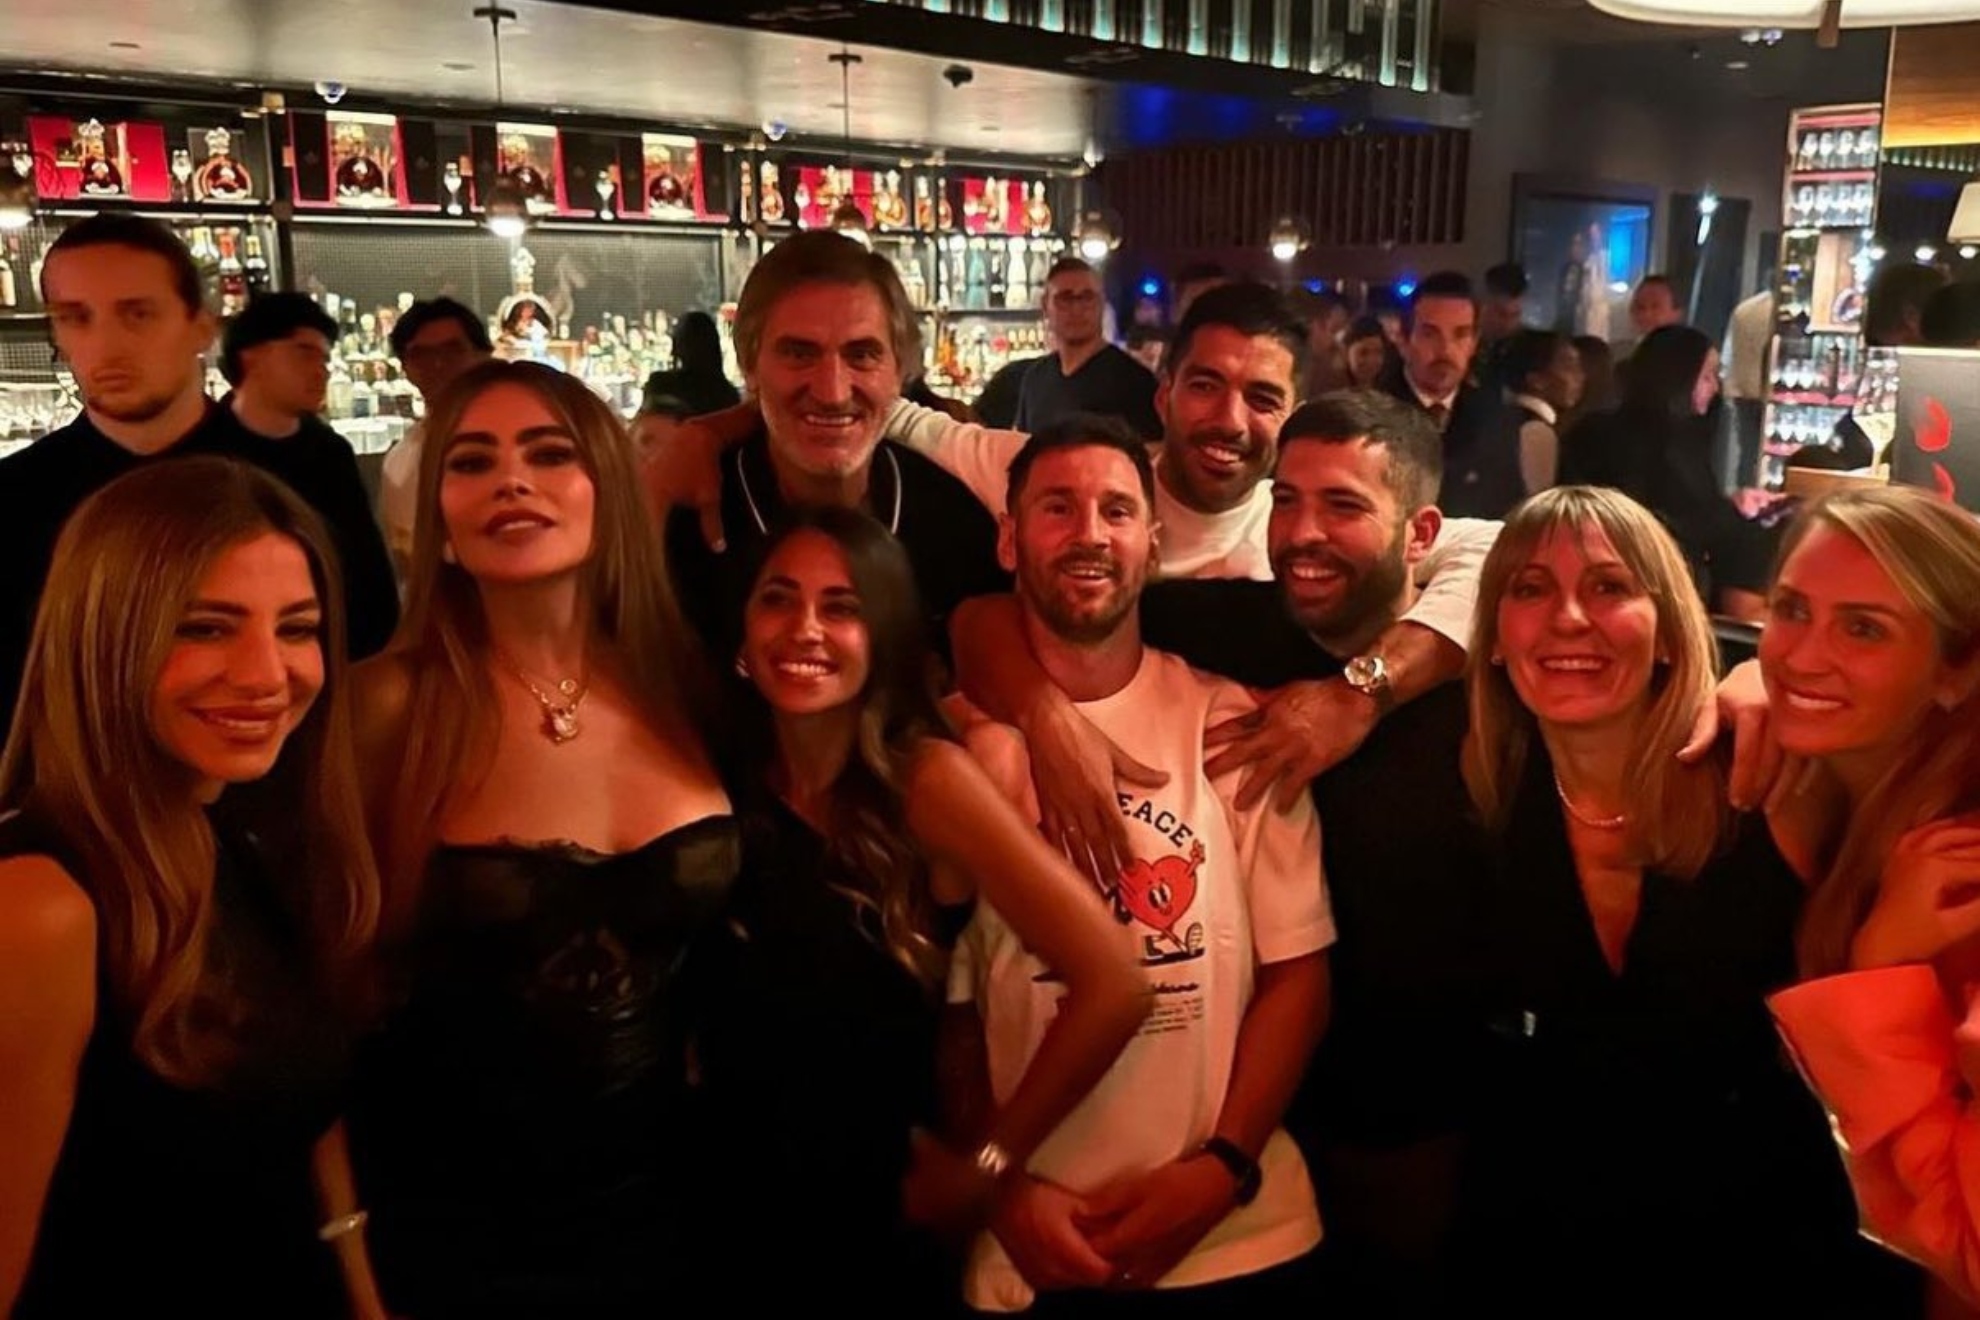 Leo Messi, Sofia Vergara, Luis Suarez, and friends meet up at Miami bar making Bad Bunnys Monaco come alive